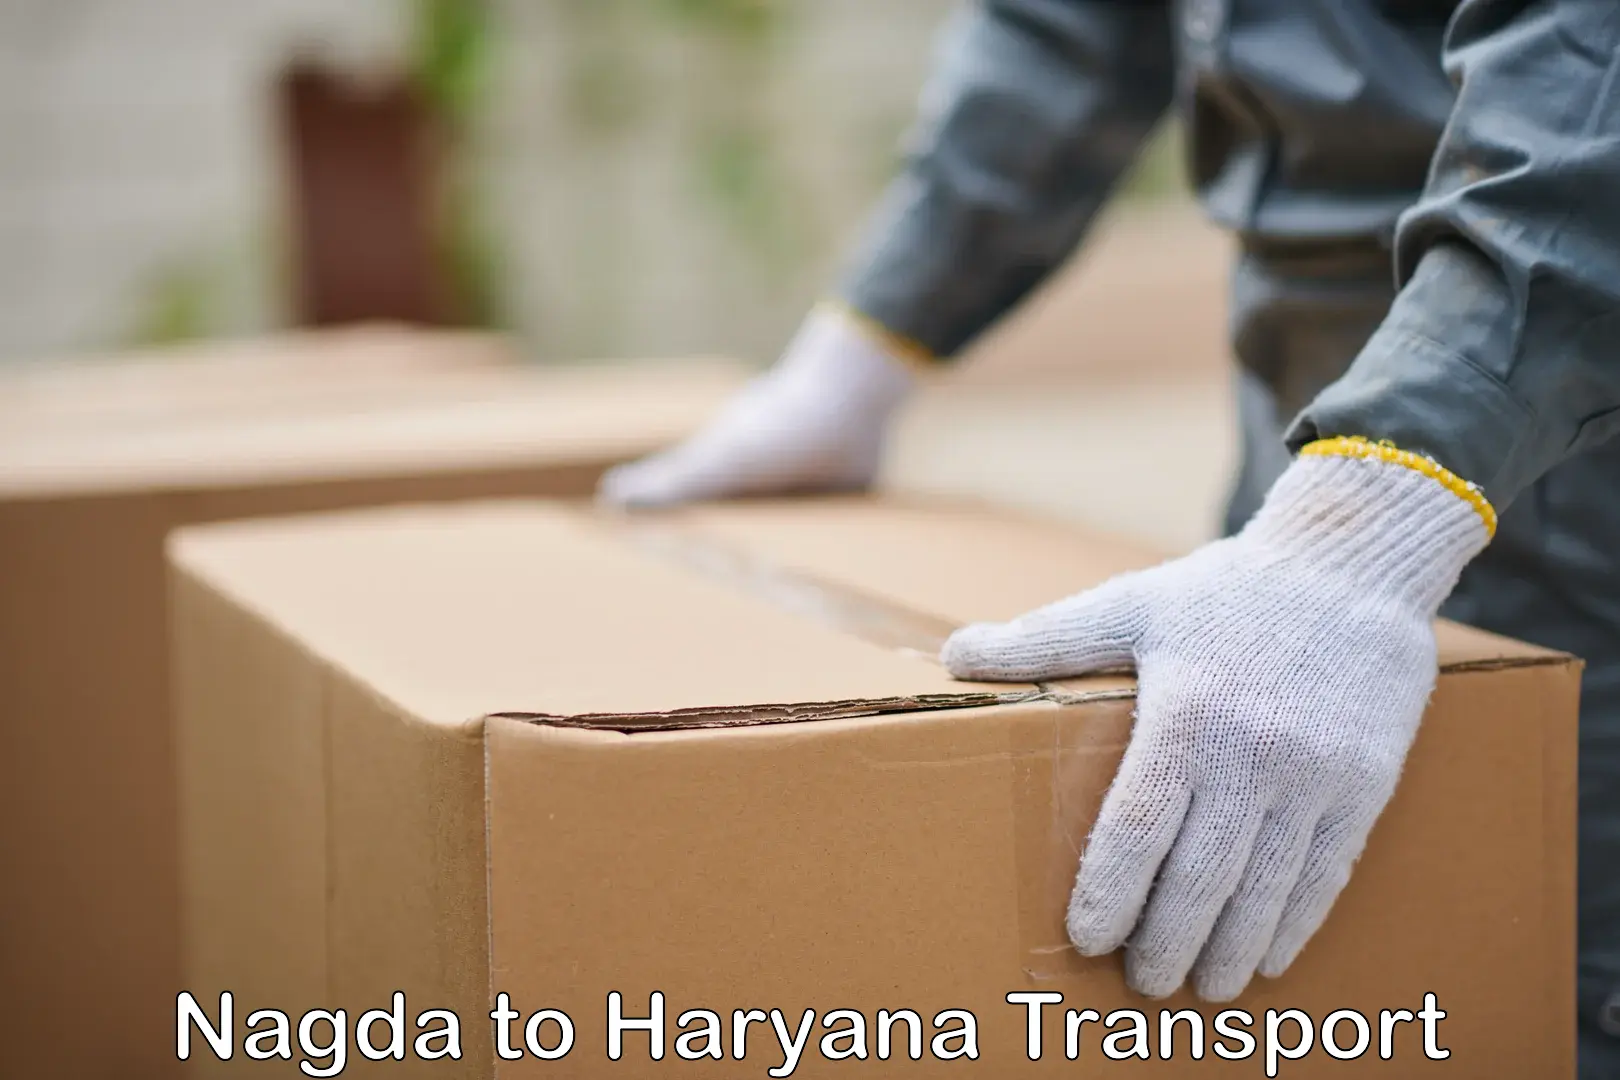 Truck transport companies in India Nagda to Hansi